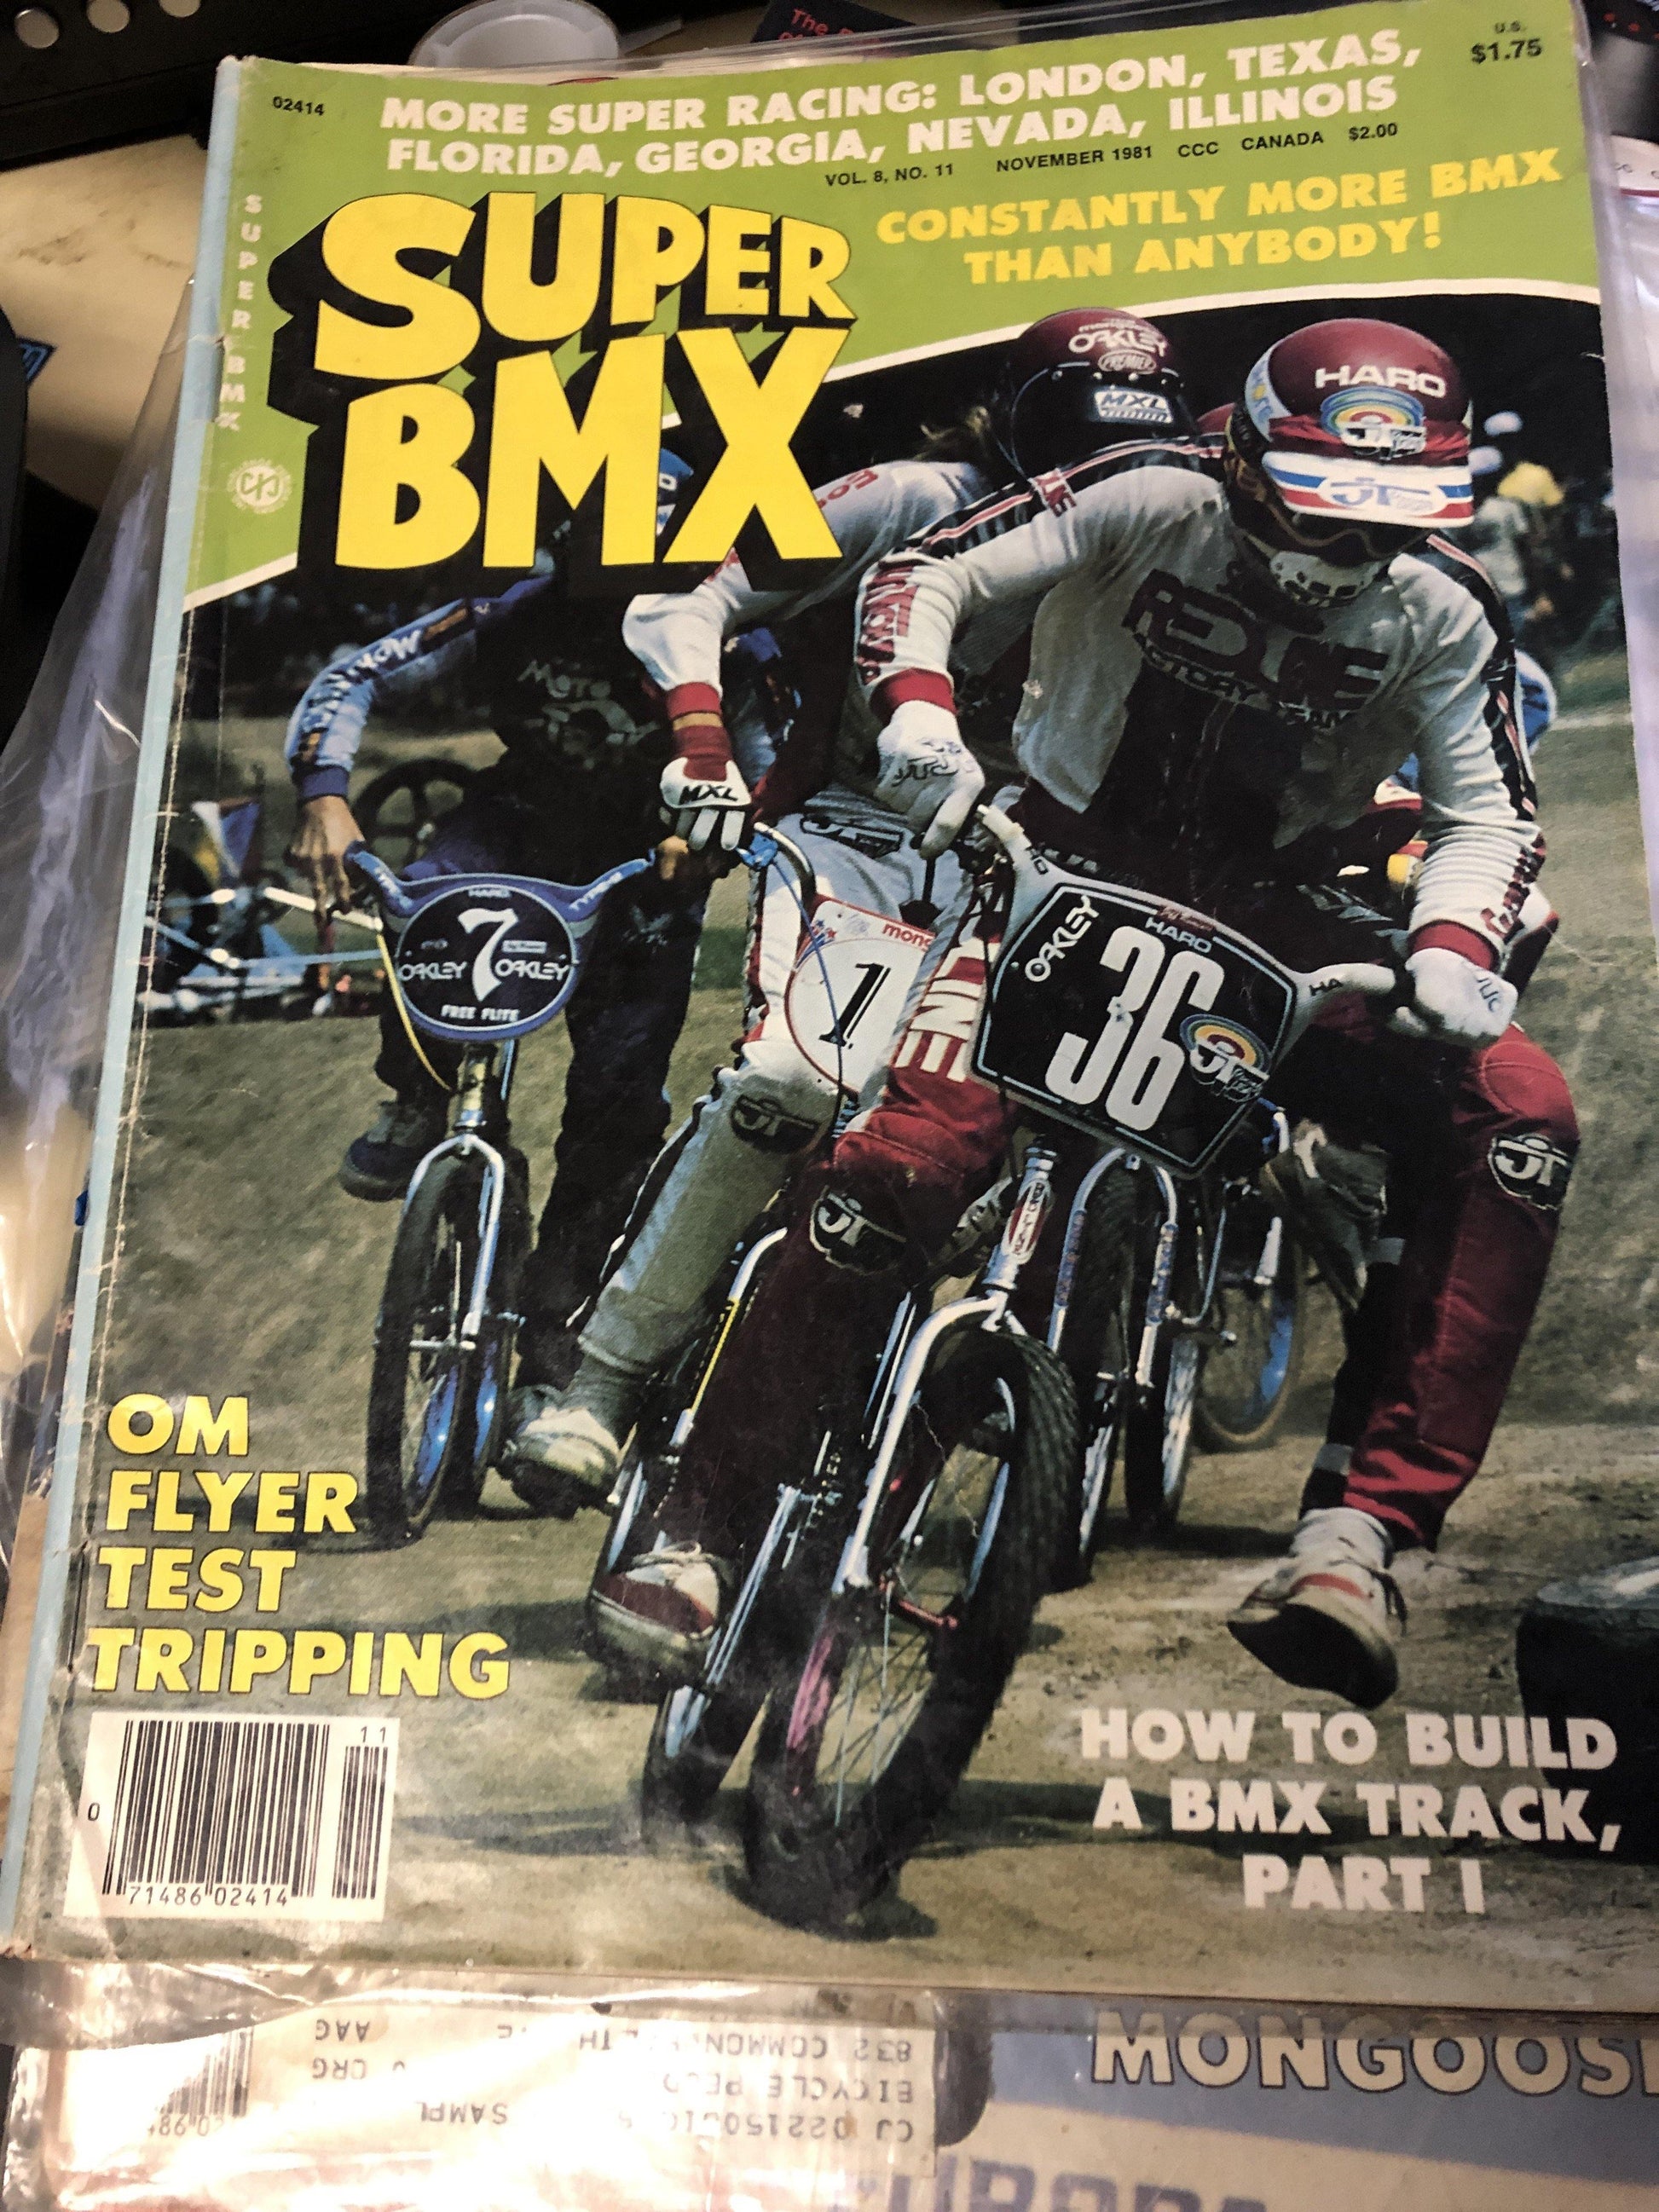 Super BMX magainze old school - POWERS BMX